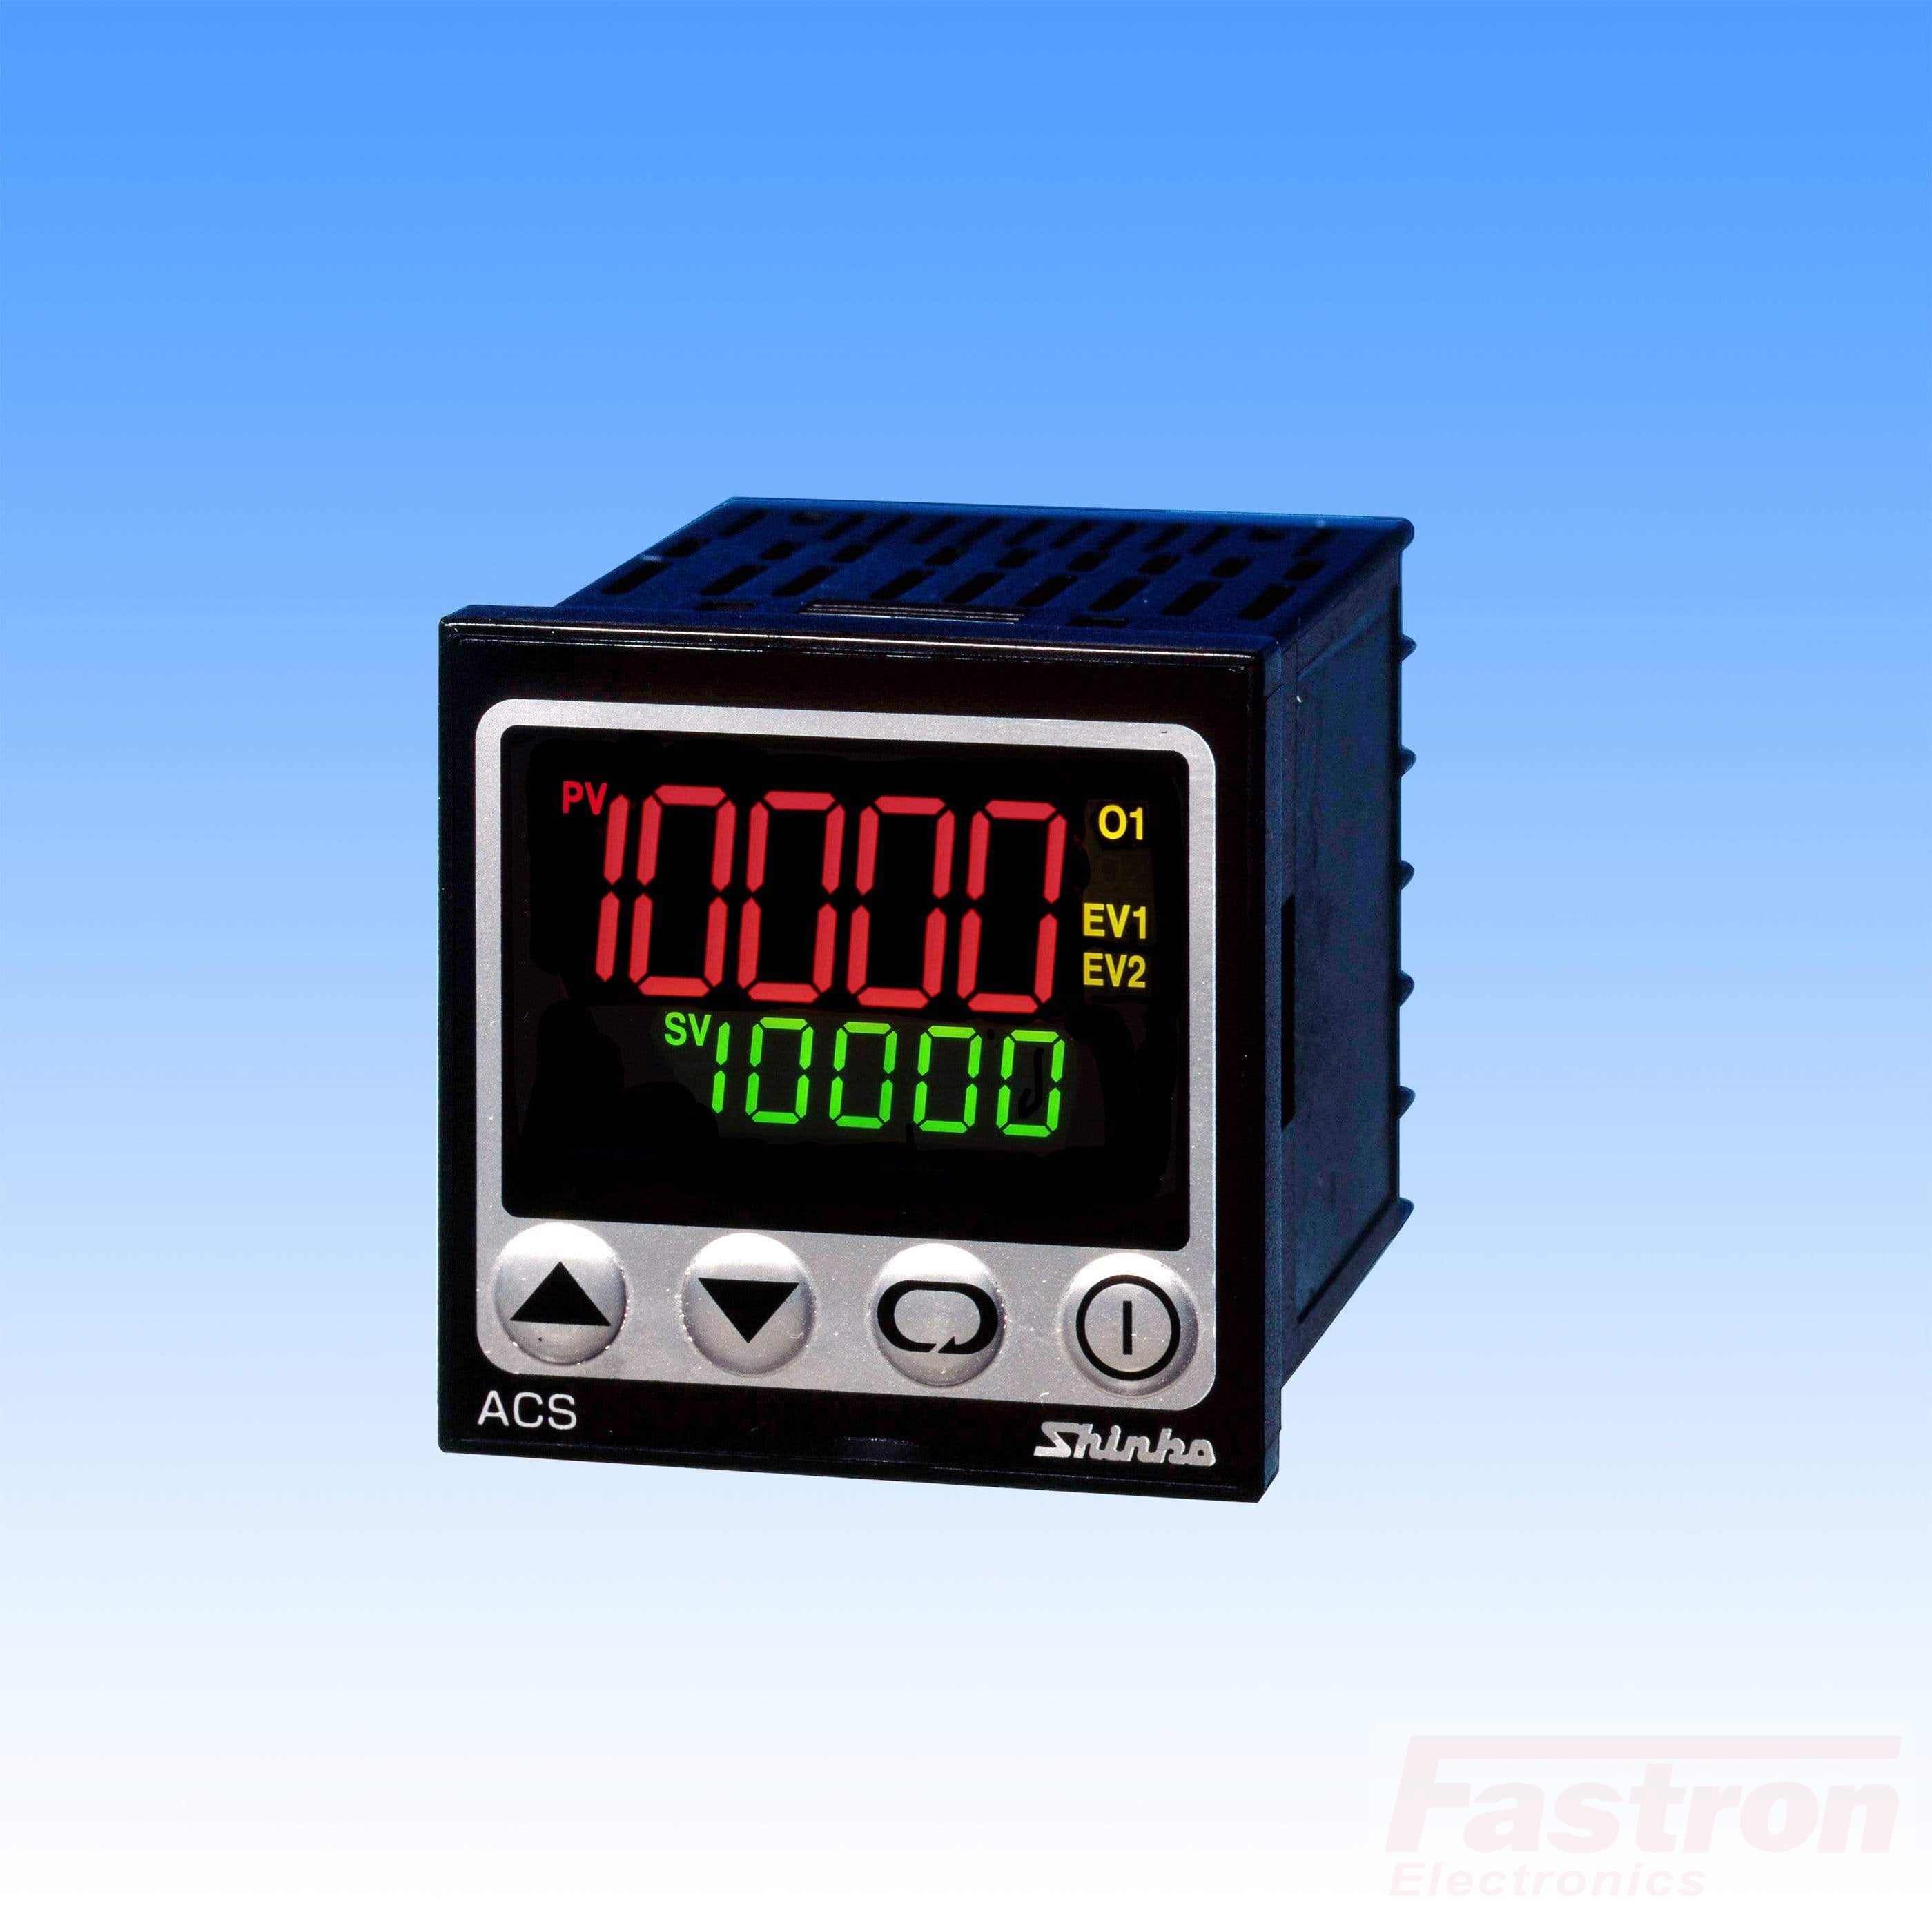 ACS13AS/M1-A2 Temp Controller, 48x48mm, 24VAC/DC, Relay output, 2nd Alarm